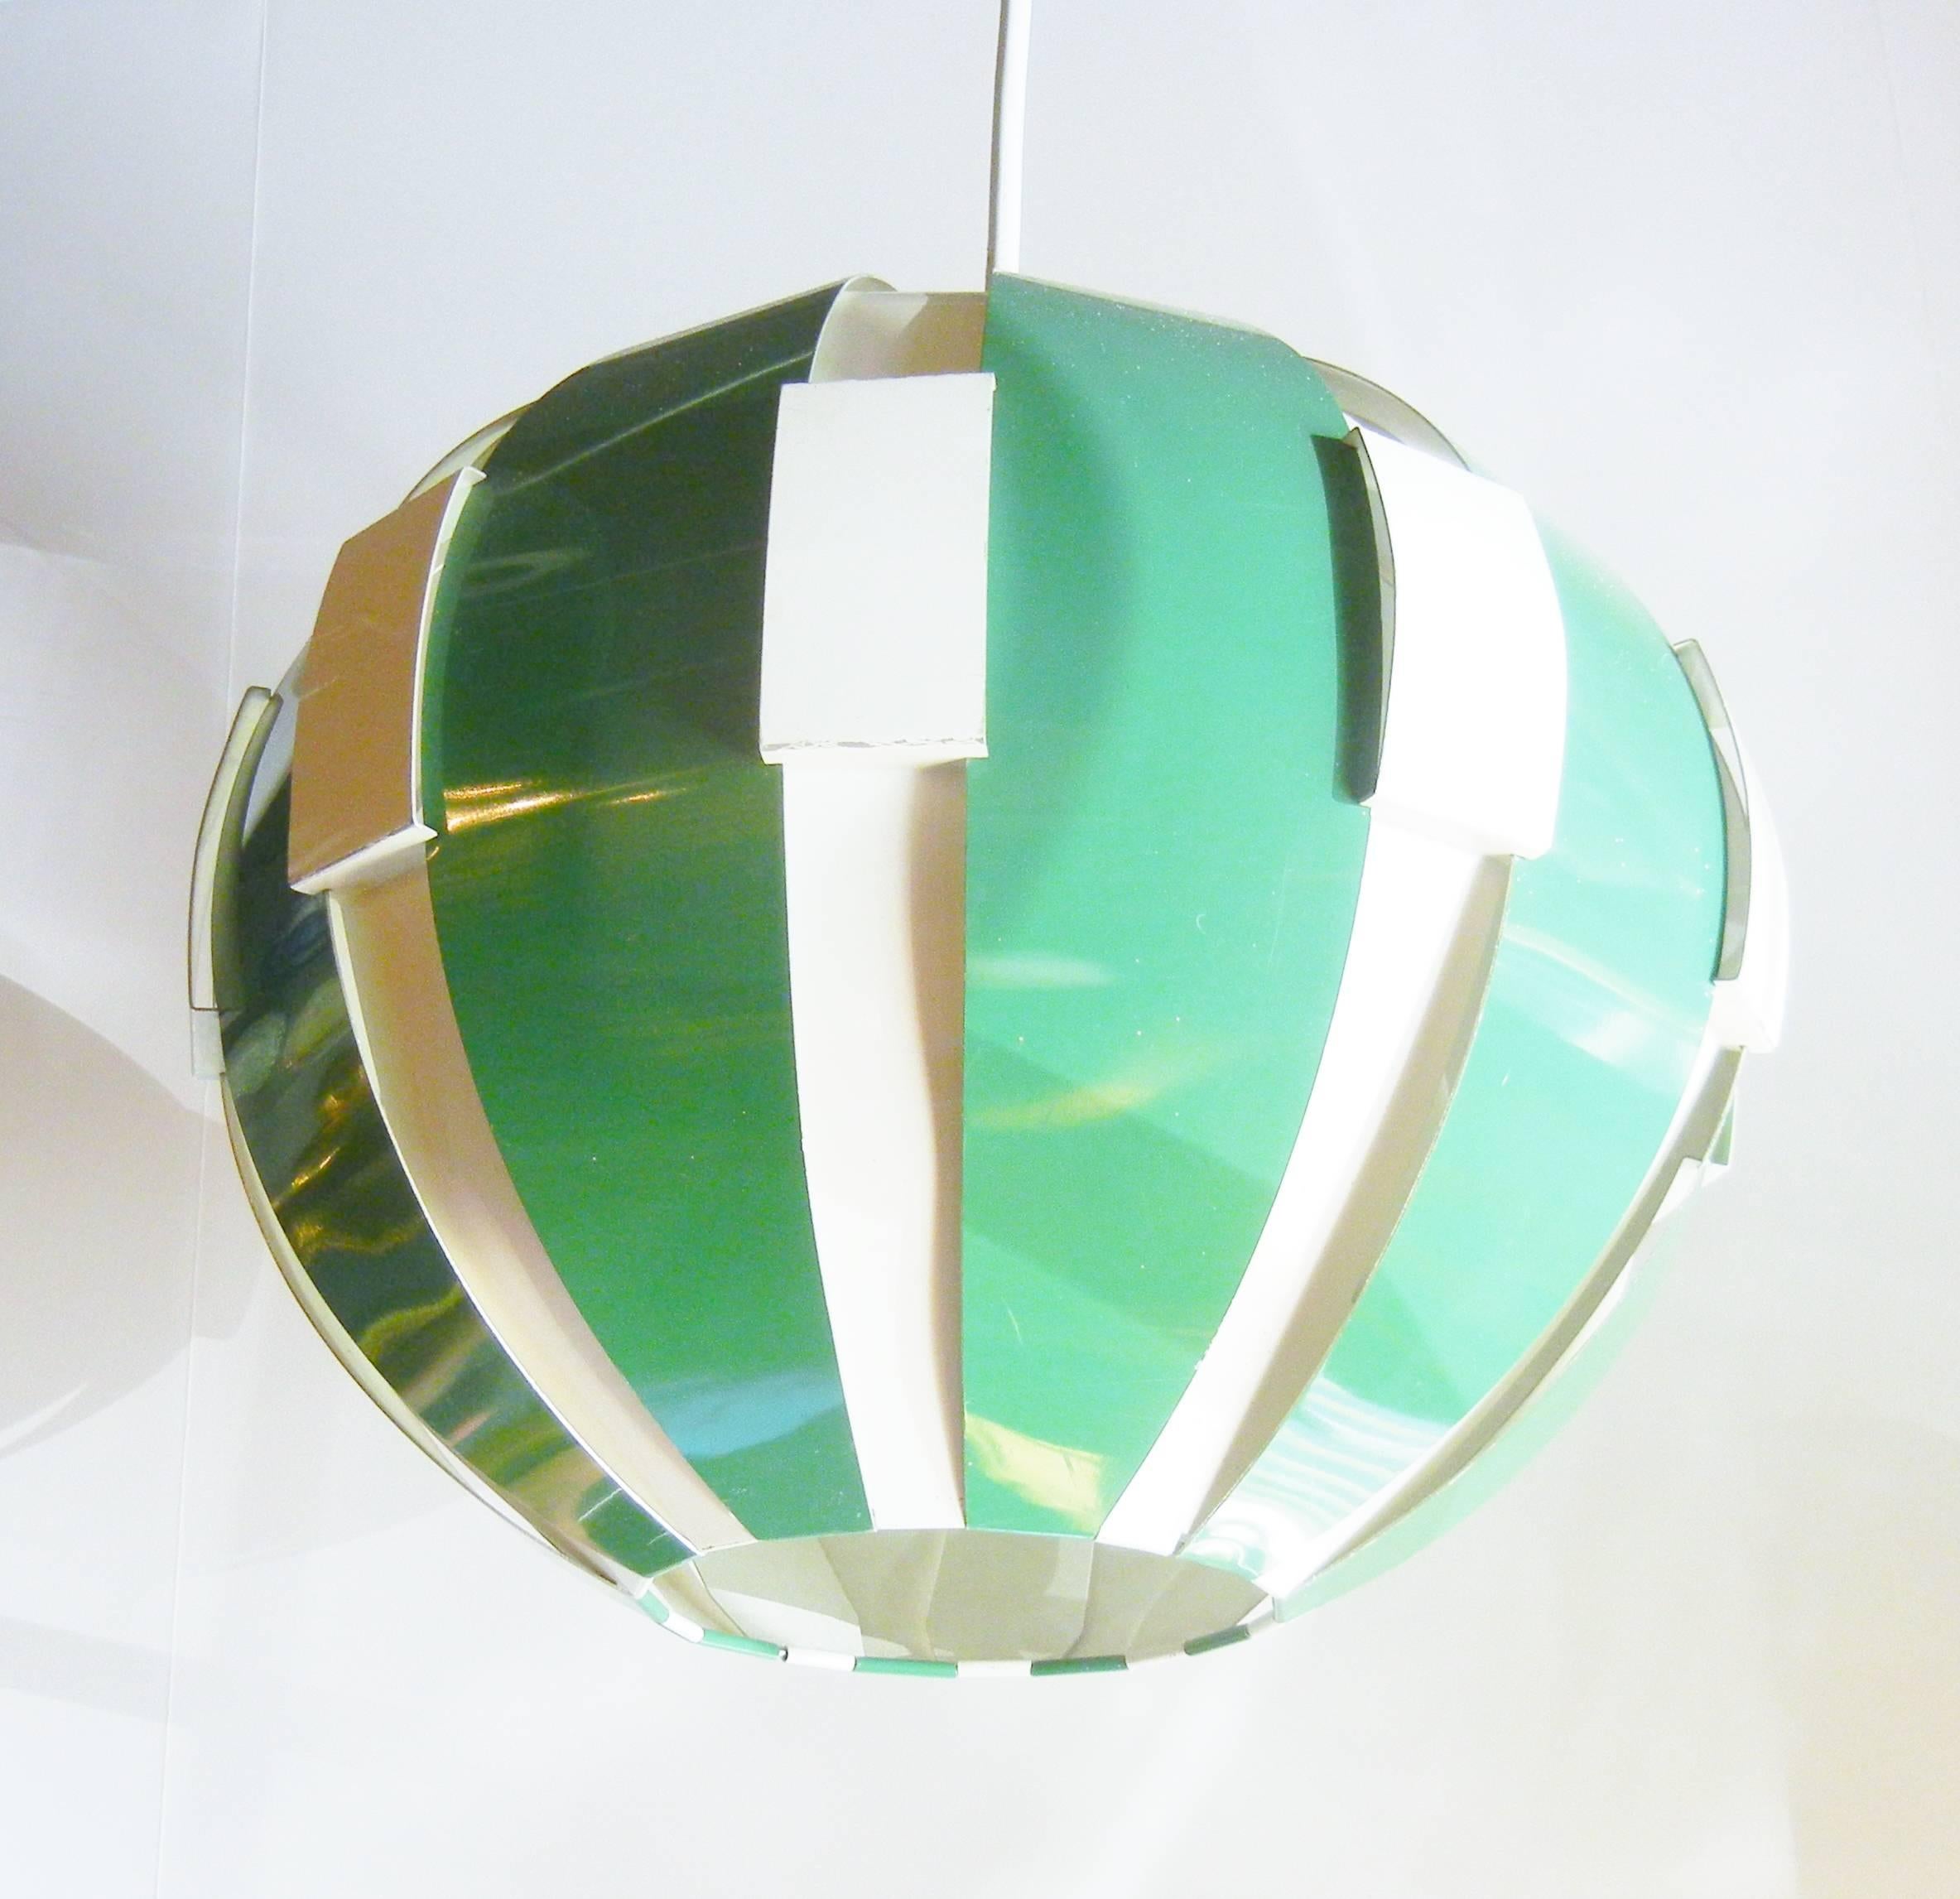 Telstar, 1st US Satellite, Pendant Lamp in Green and Ivory Aluminum, 1962 1